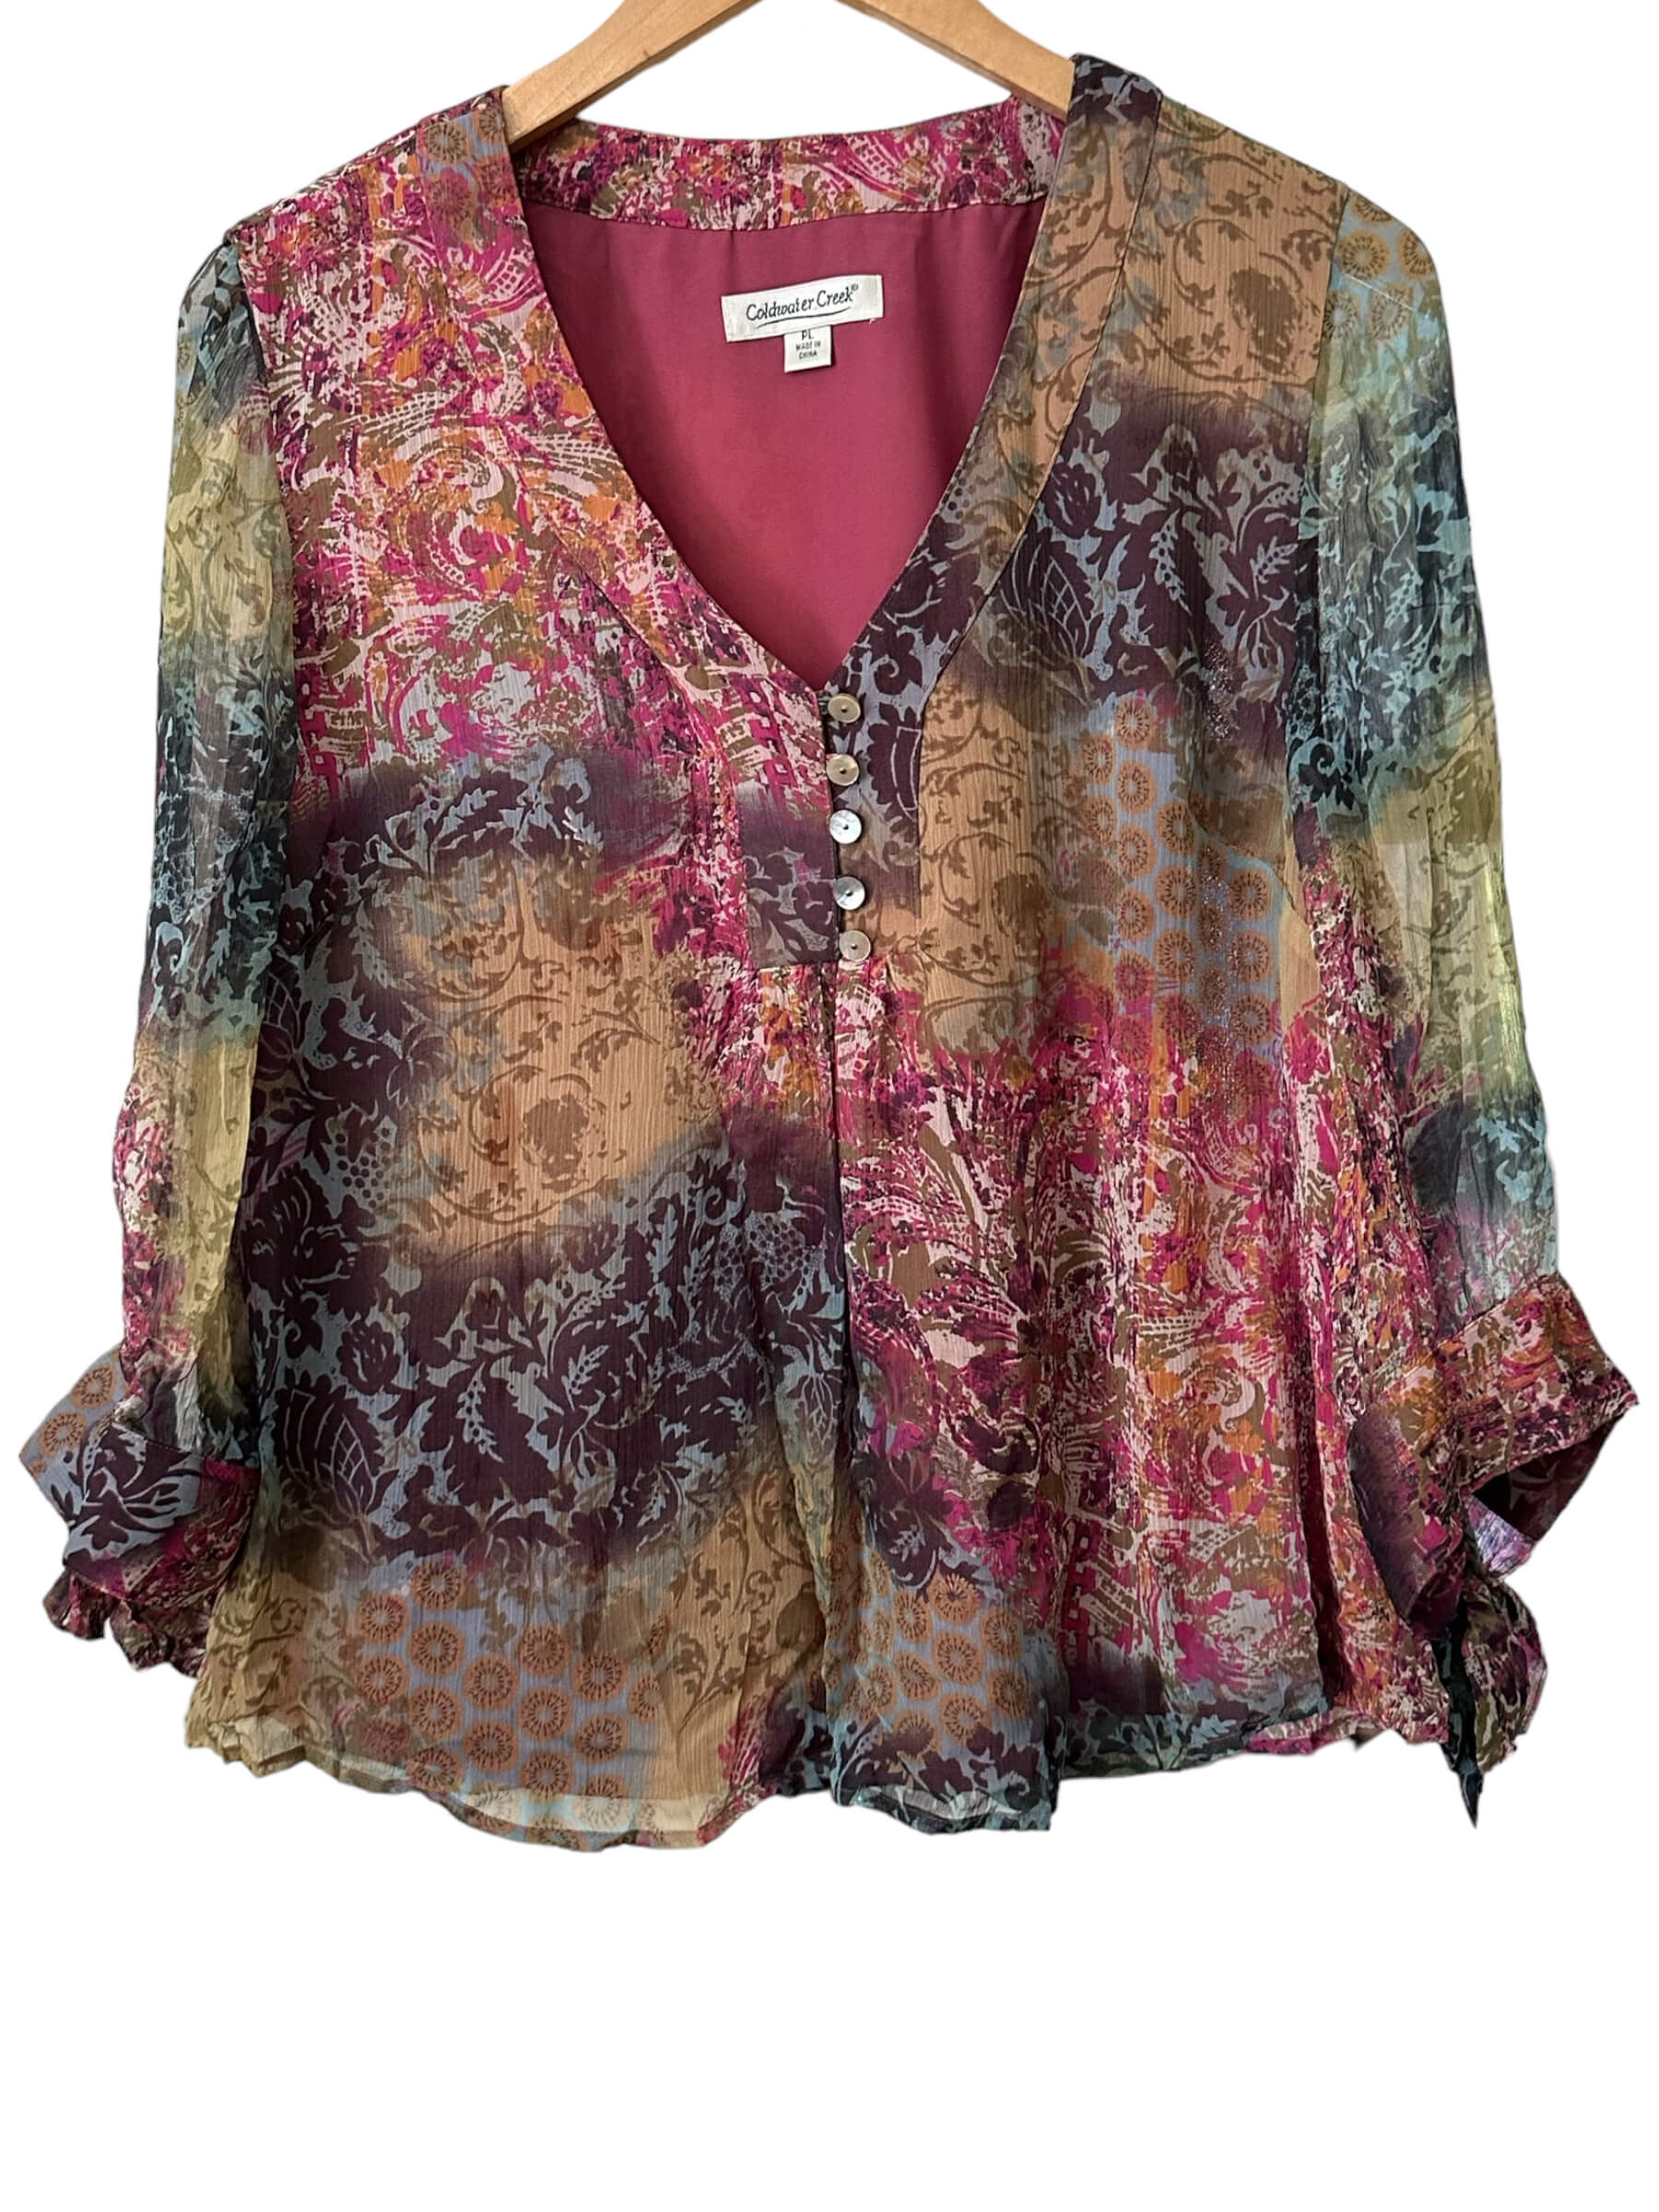 Dark Autumn COLDWATER CREEK batik print silk blouse